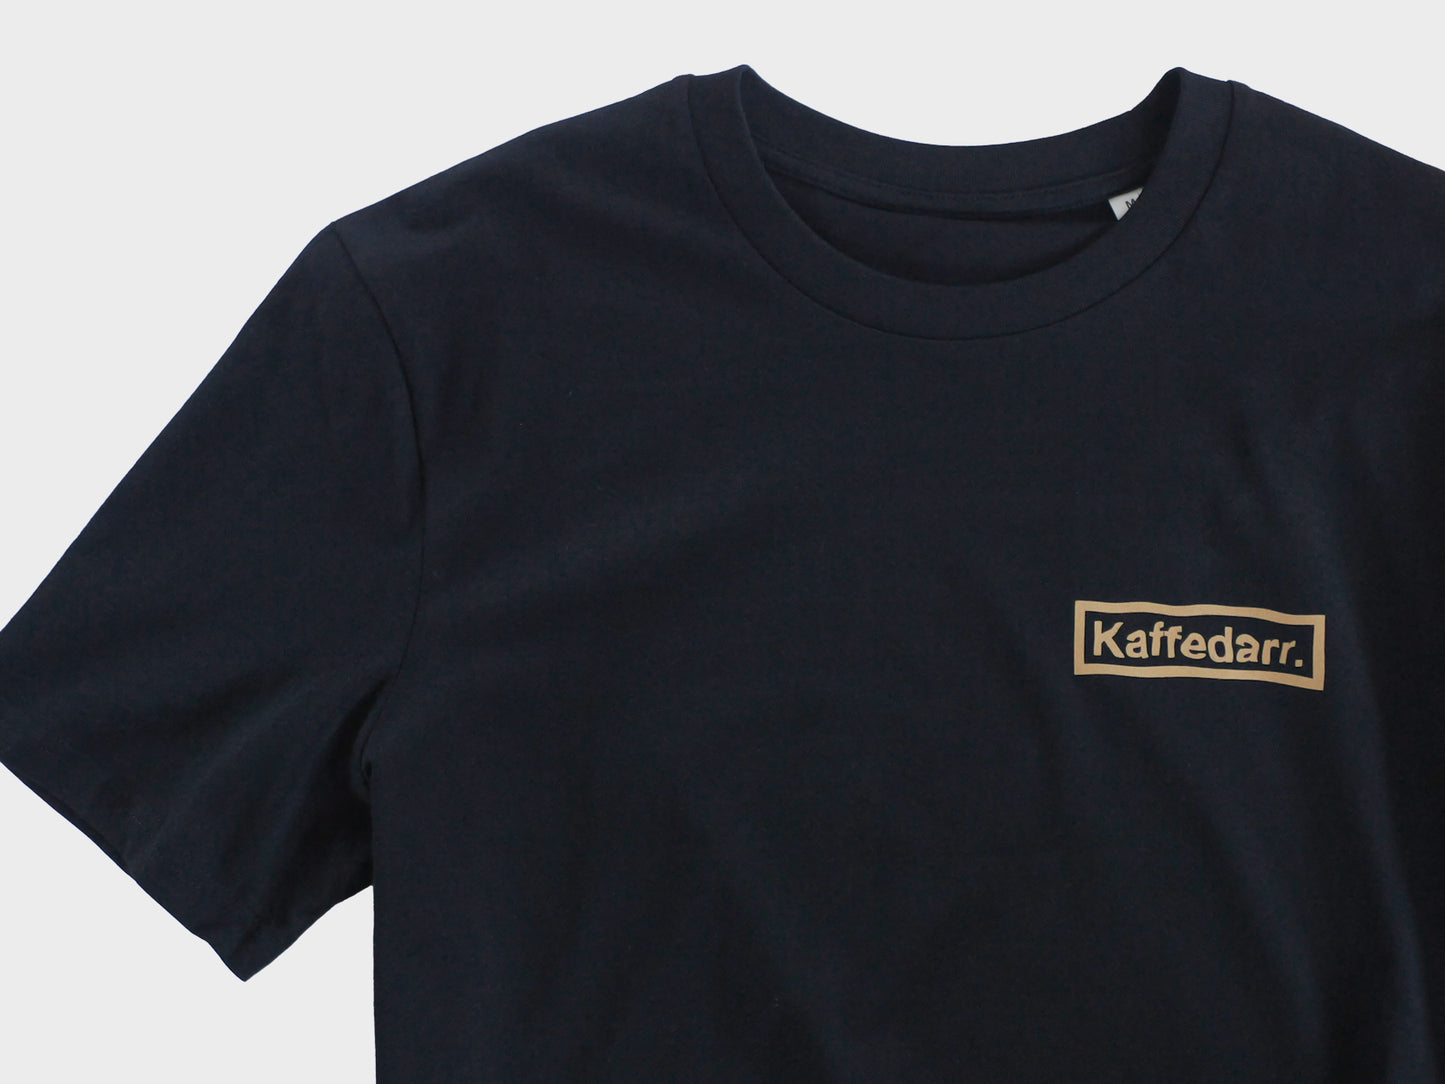 T-shirt "Kaffedarr Black"